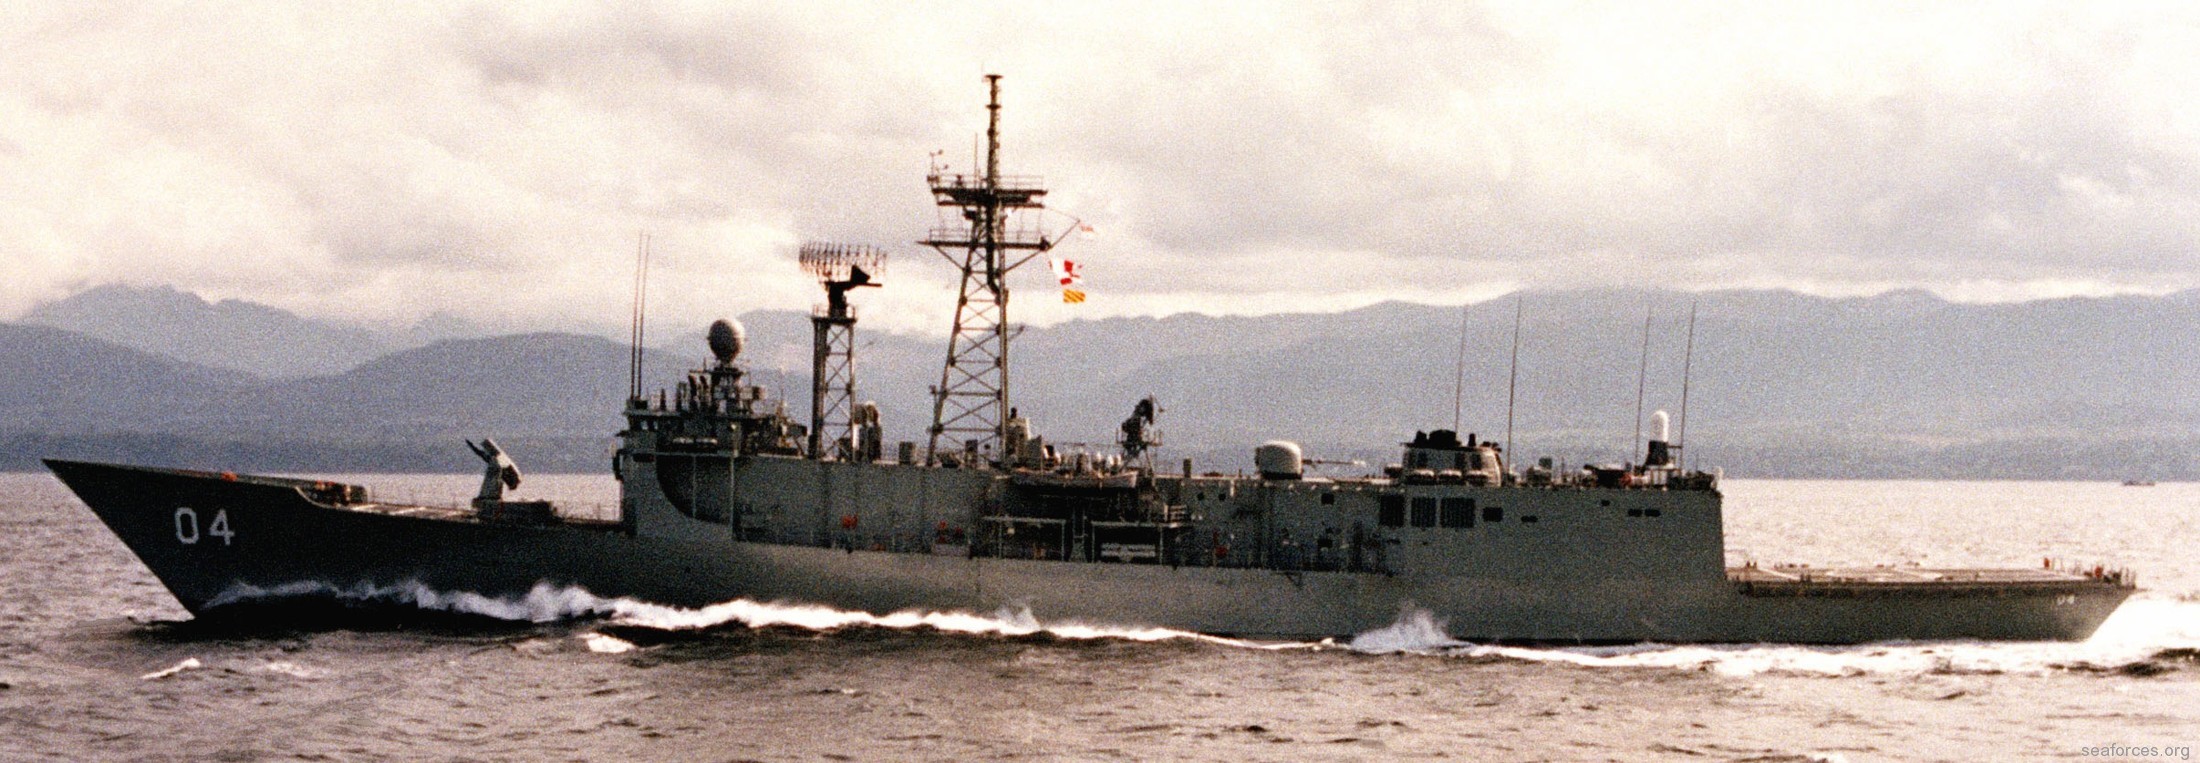 ffg-04 hmas darwin adelaide class frigate royal australian navy 1984 08